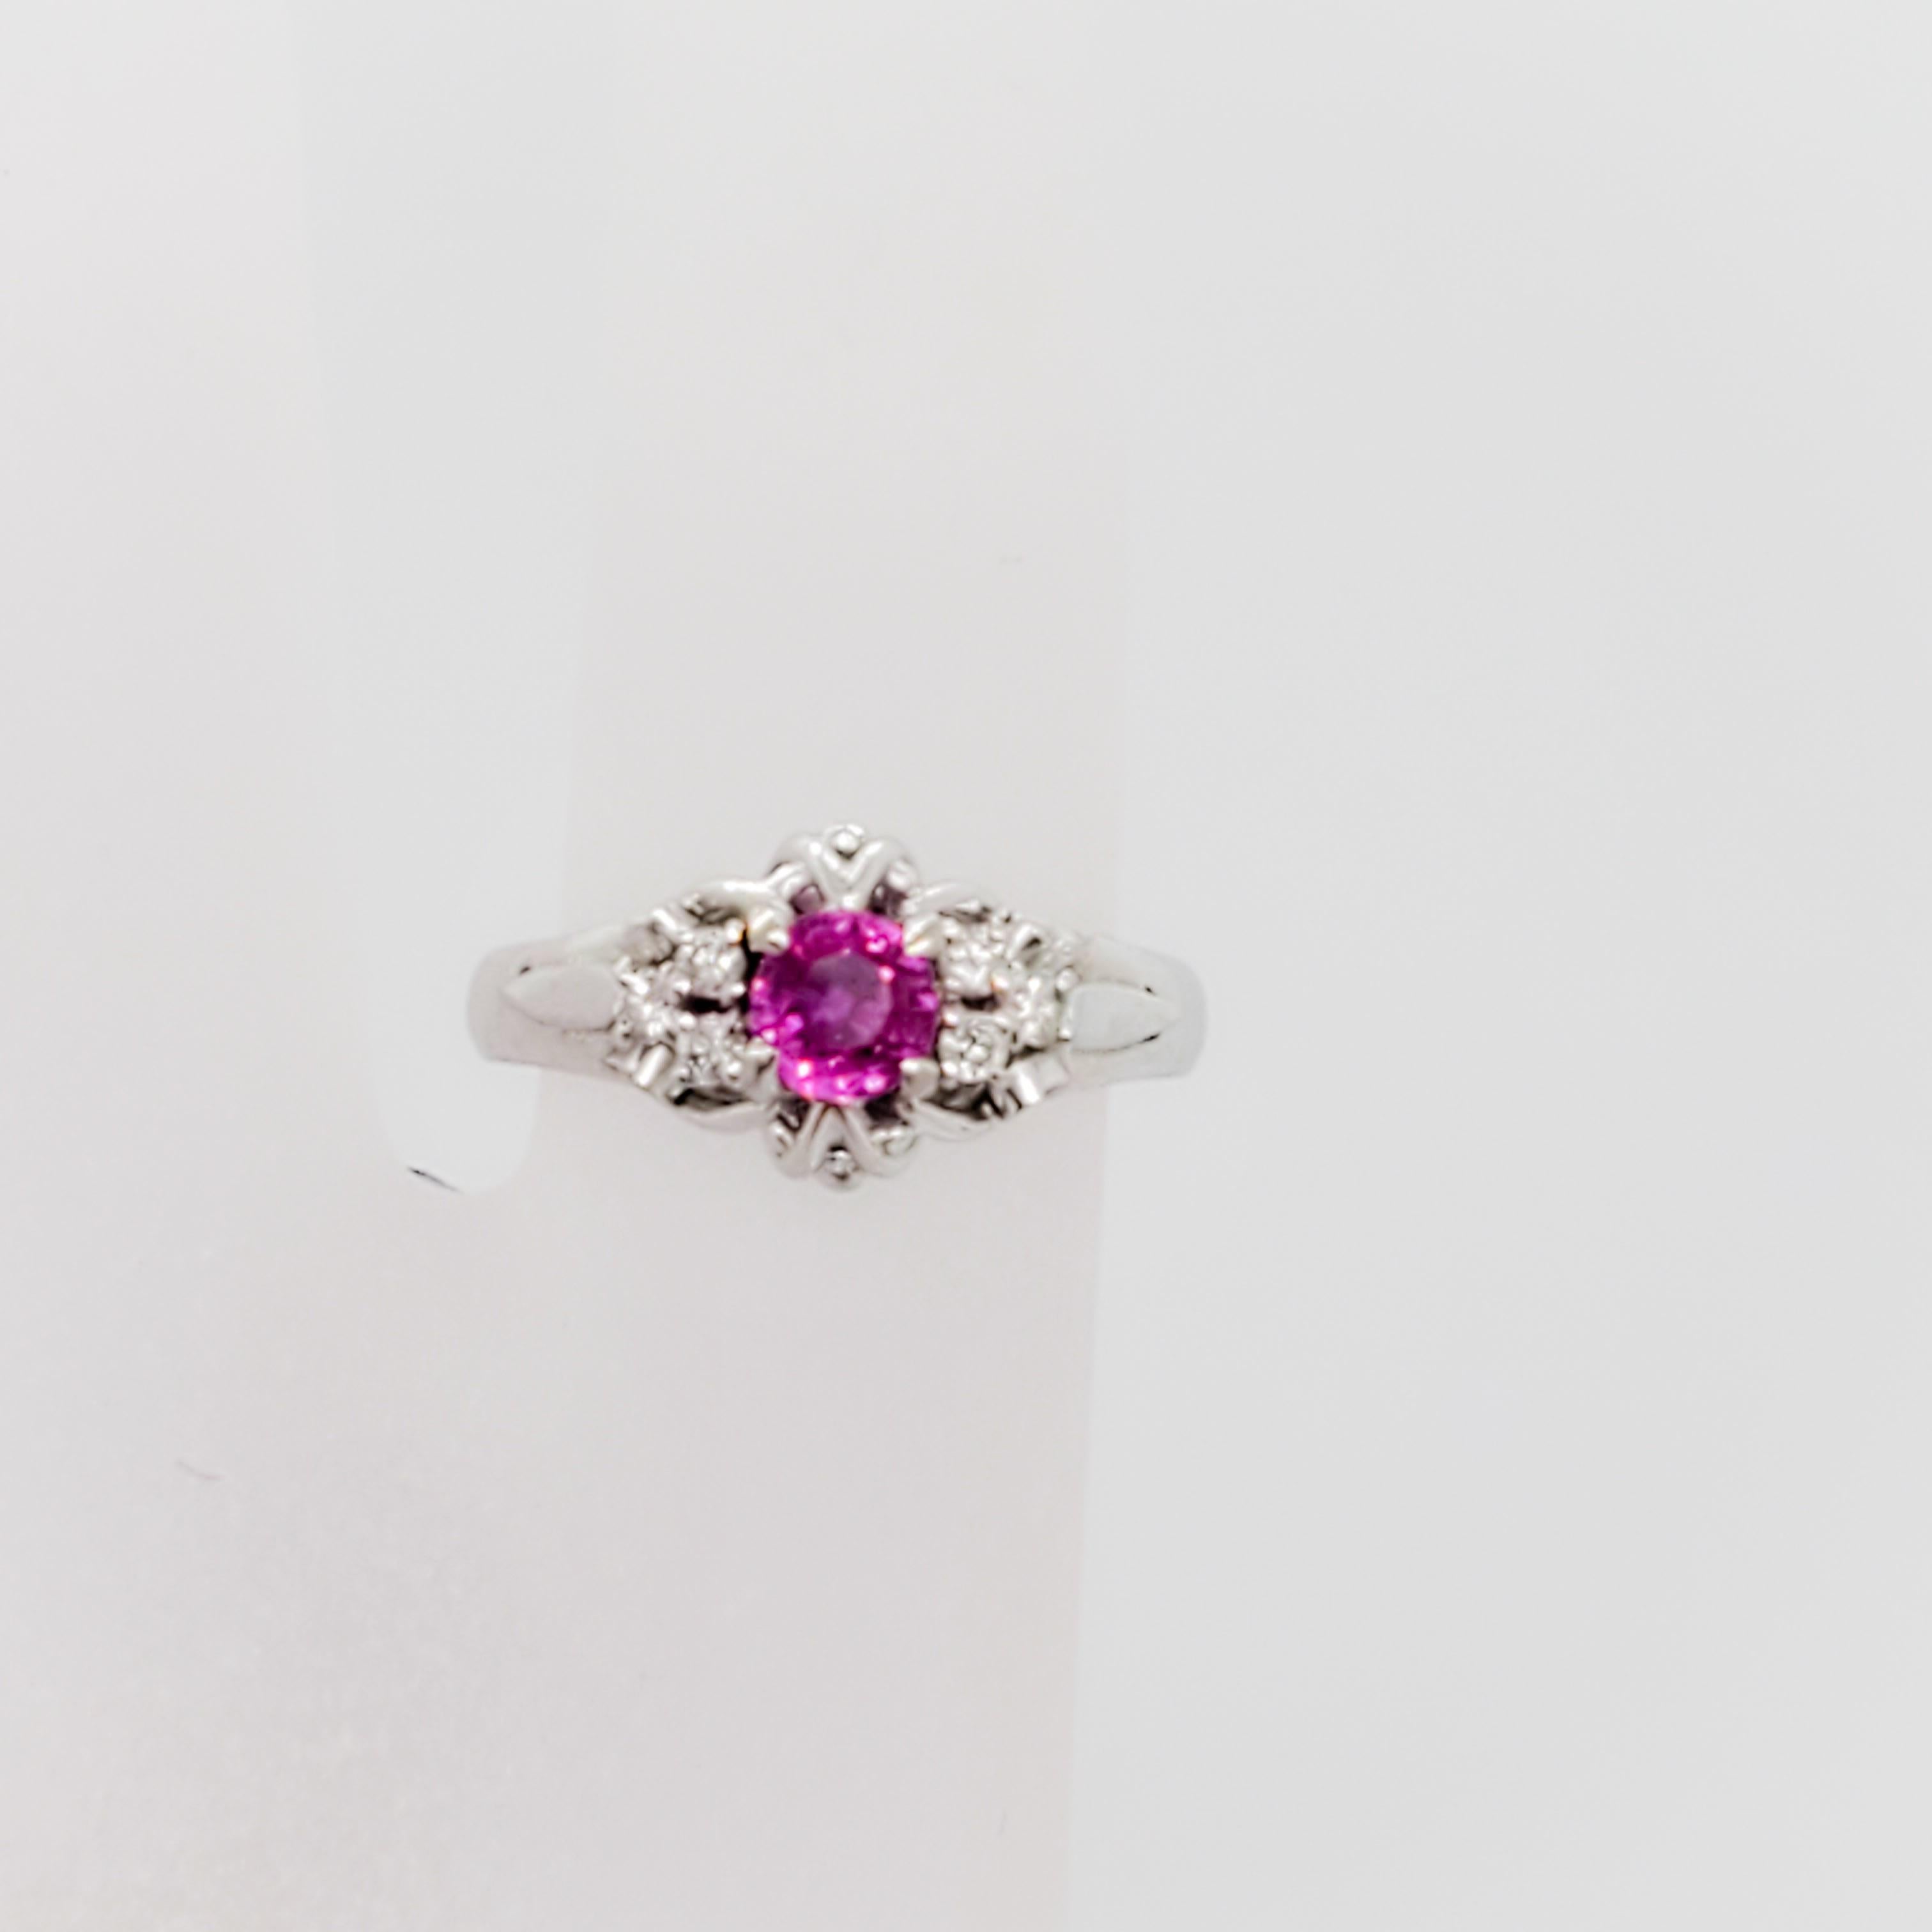 4 carat pink sapphire ring